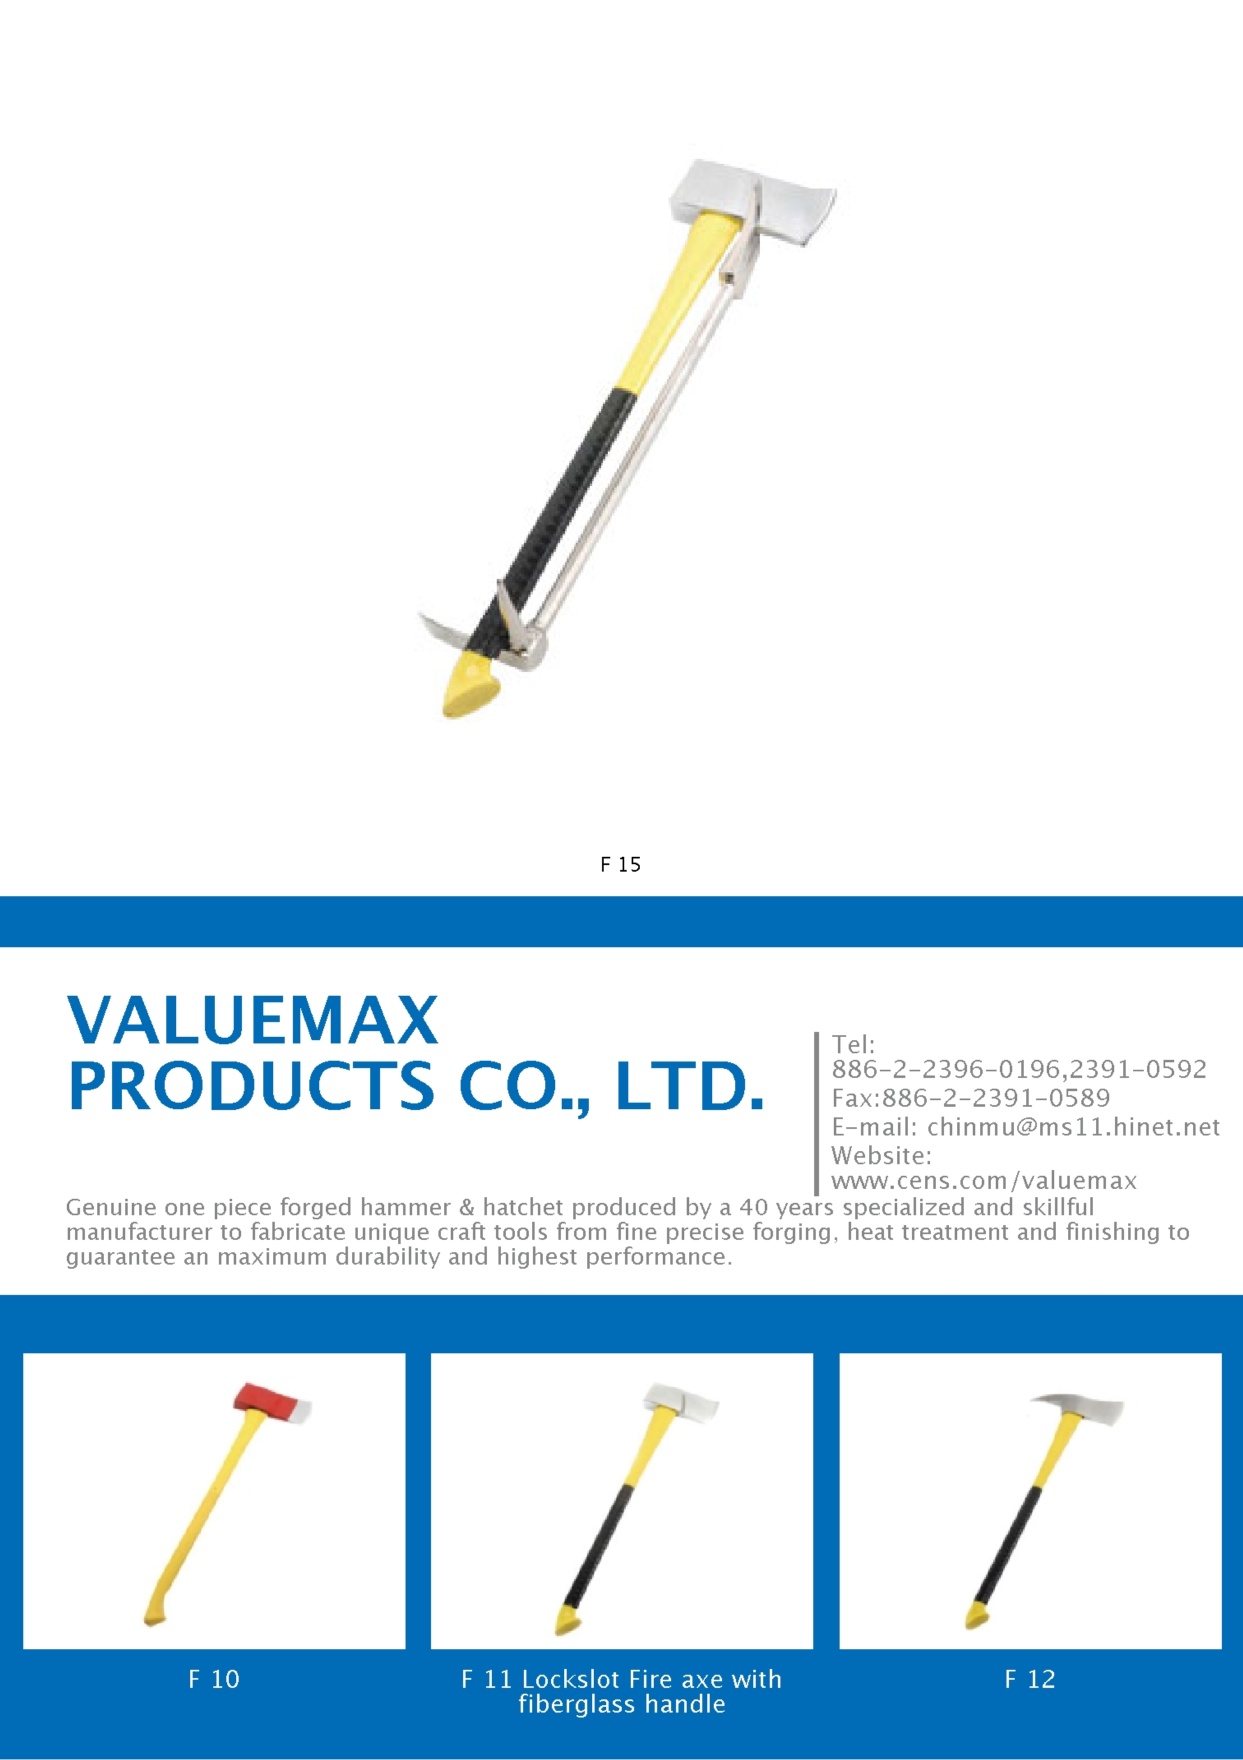 VALUEMAX PRODUCTS CO., LTD.